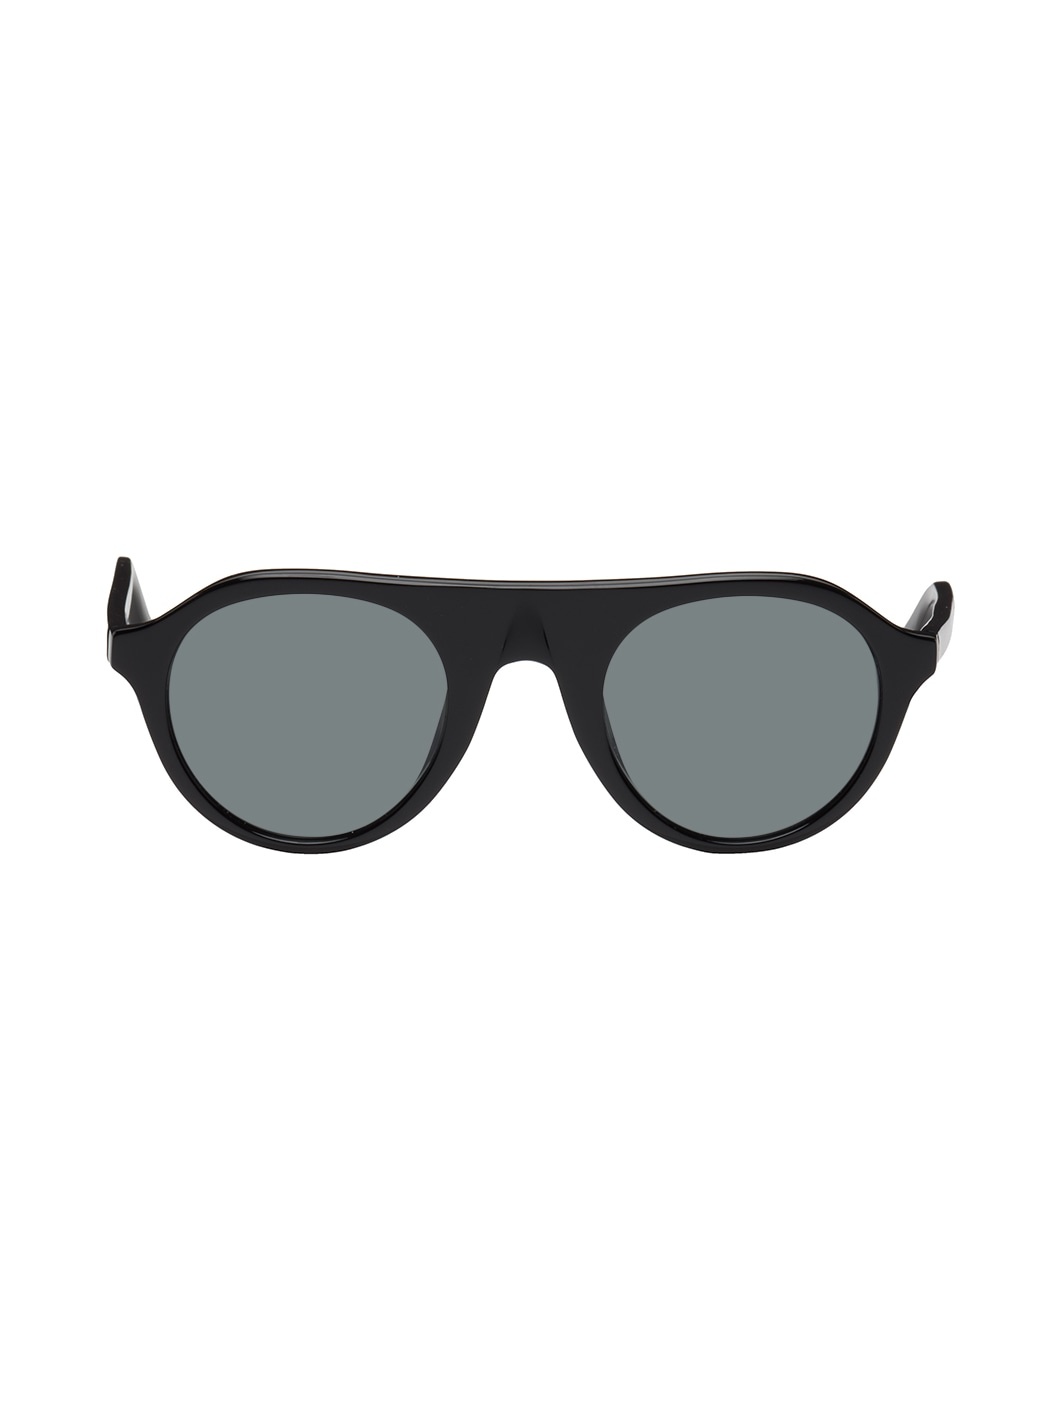 Black Linda Farrow Edition 63 C5 Sunglasses - 1